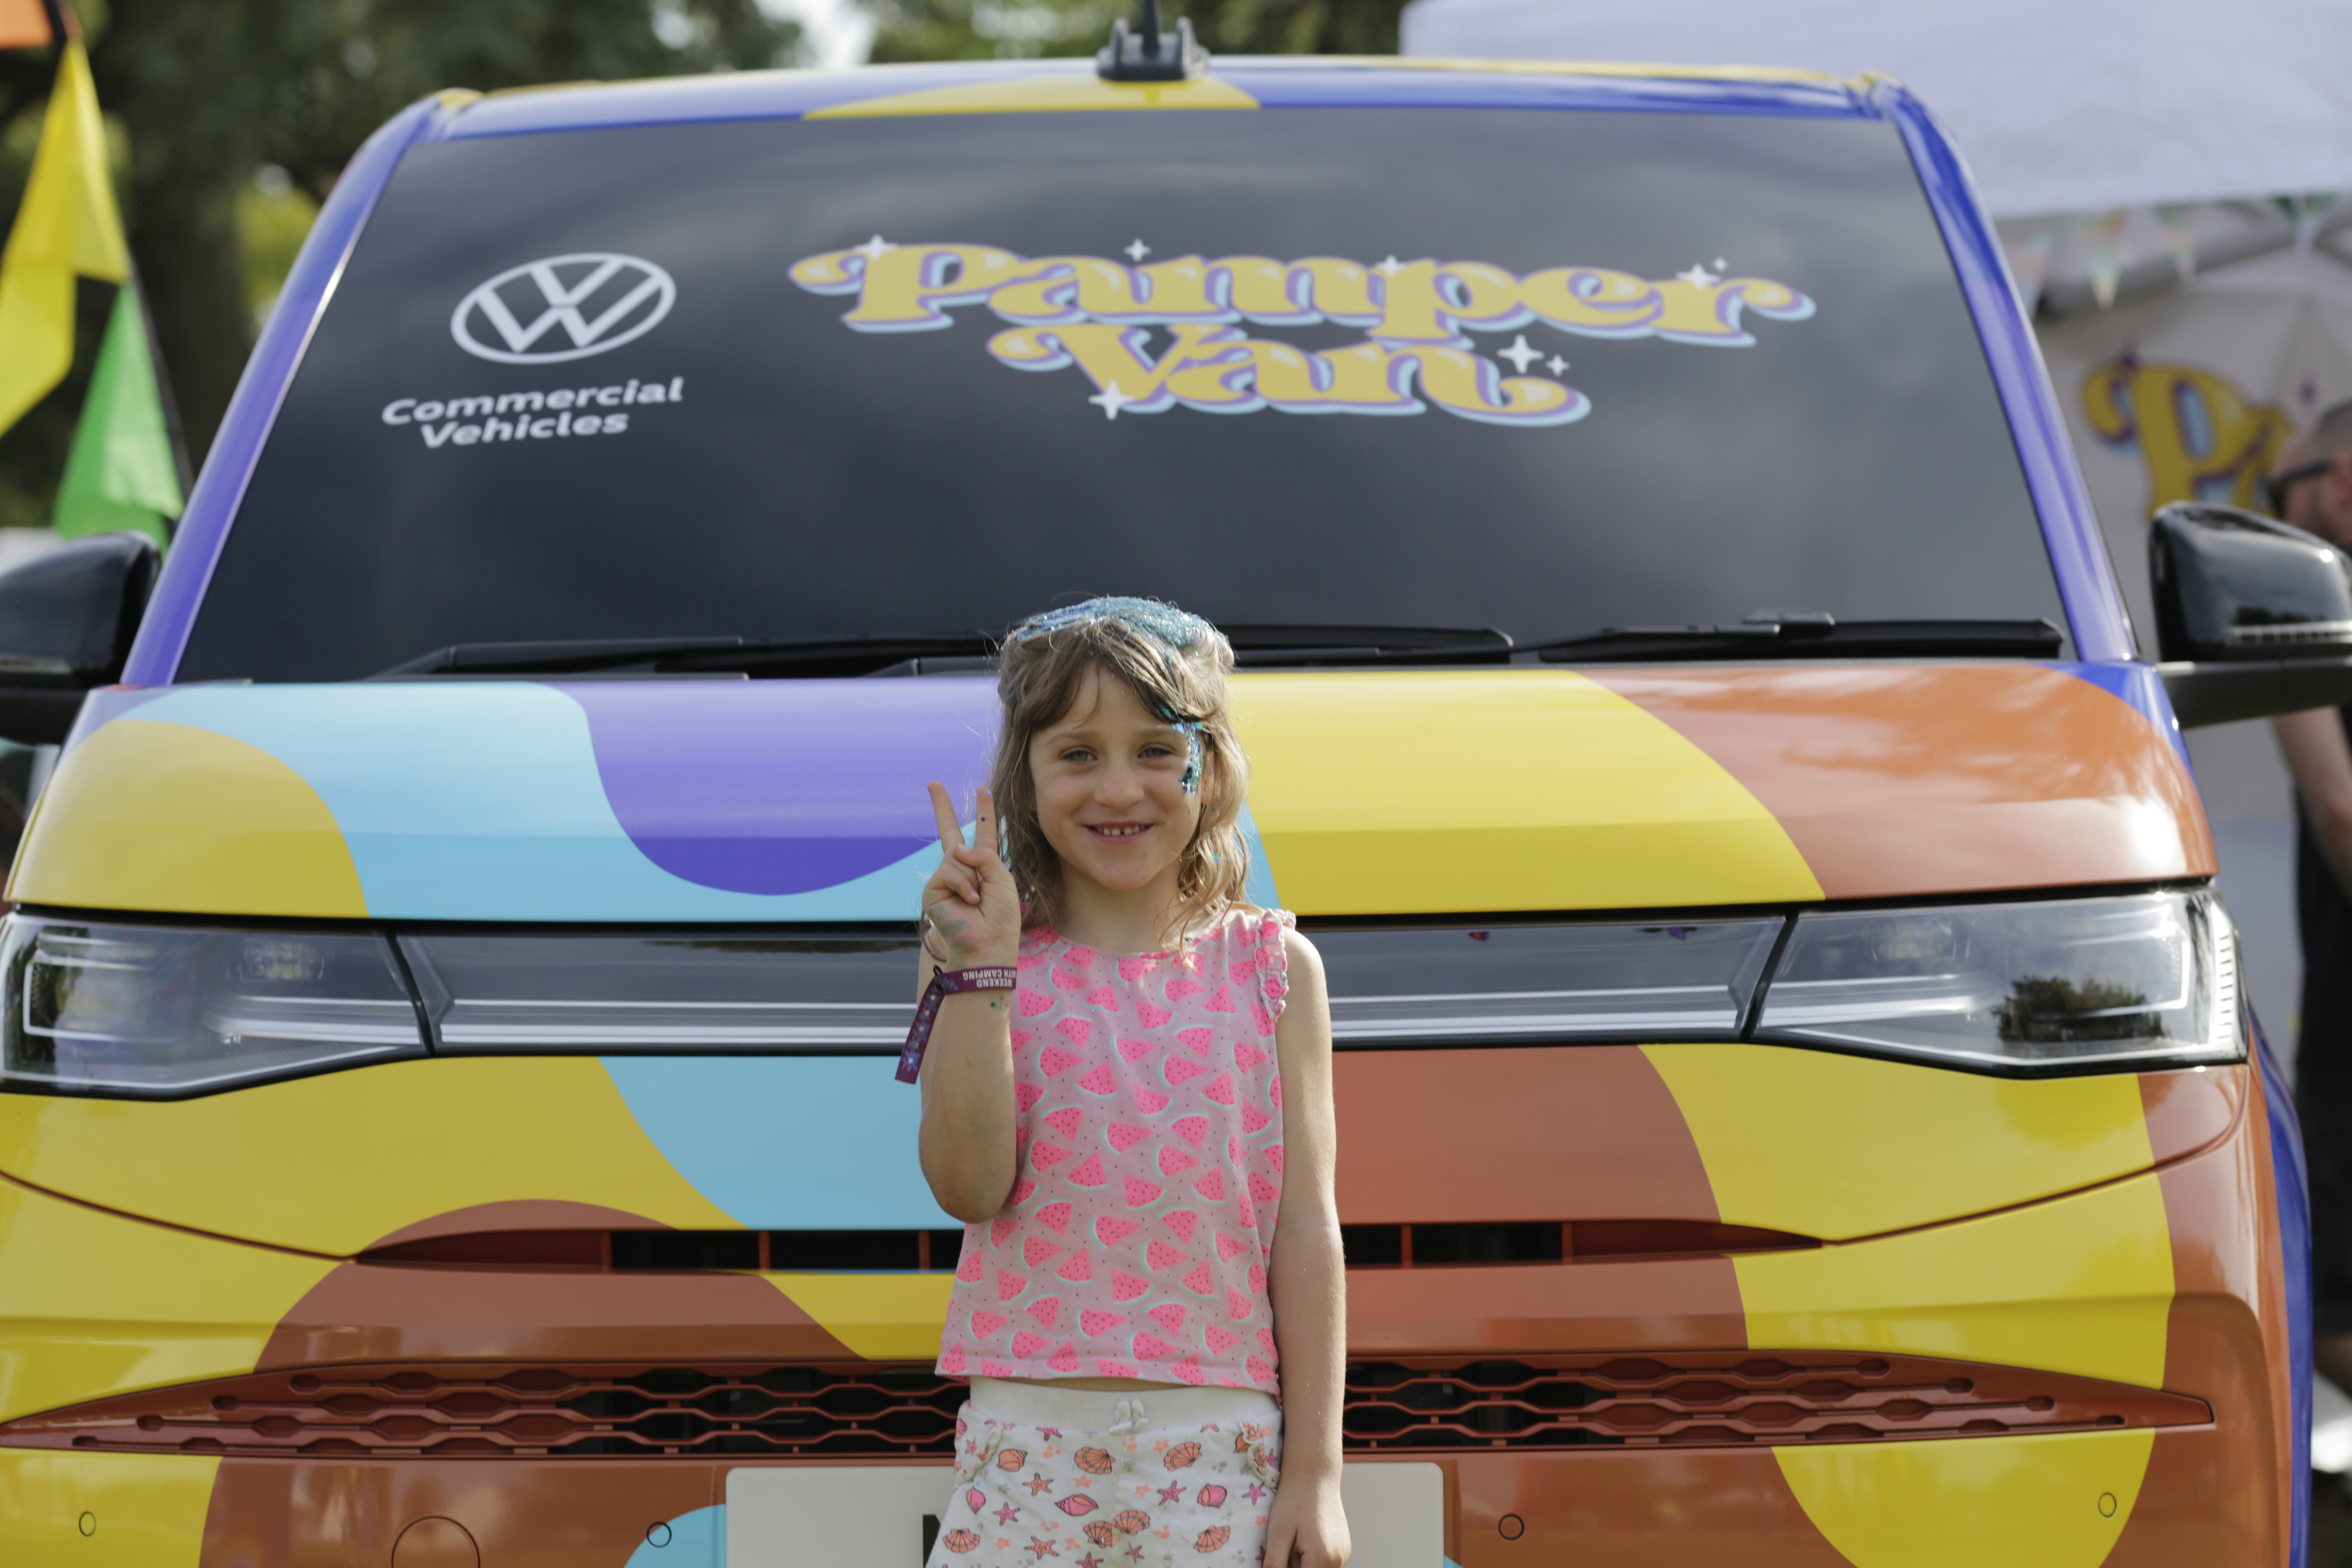 Multivan-based ‘Pamper Van’ brings some festival glamour